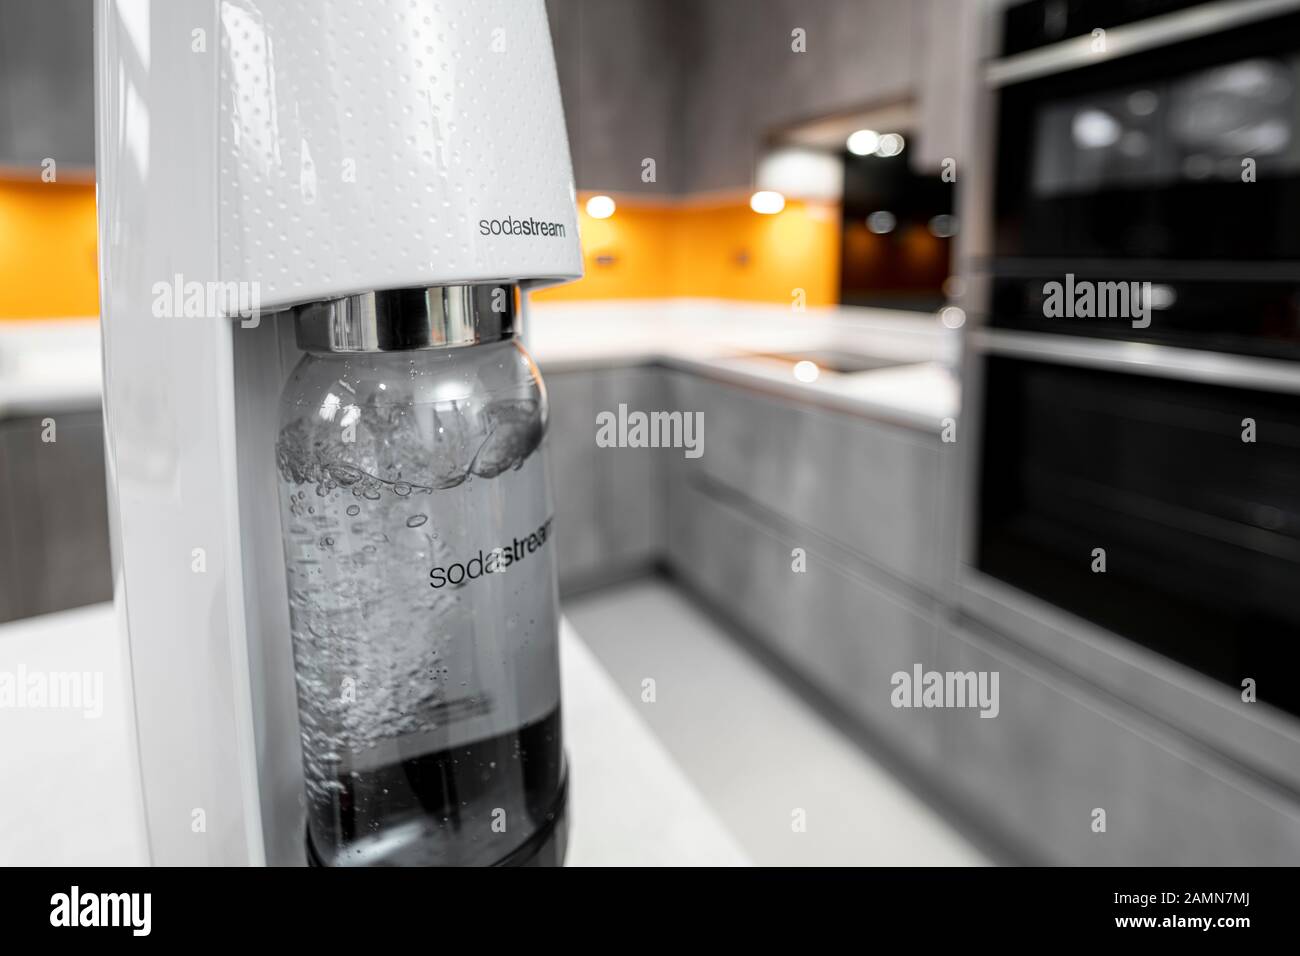 Sodastream in a modern contemporary grey kitchen Stock Photo